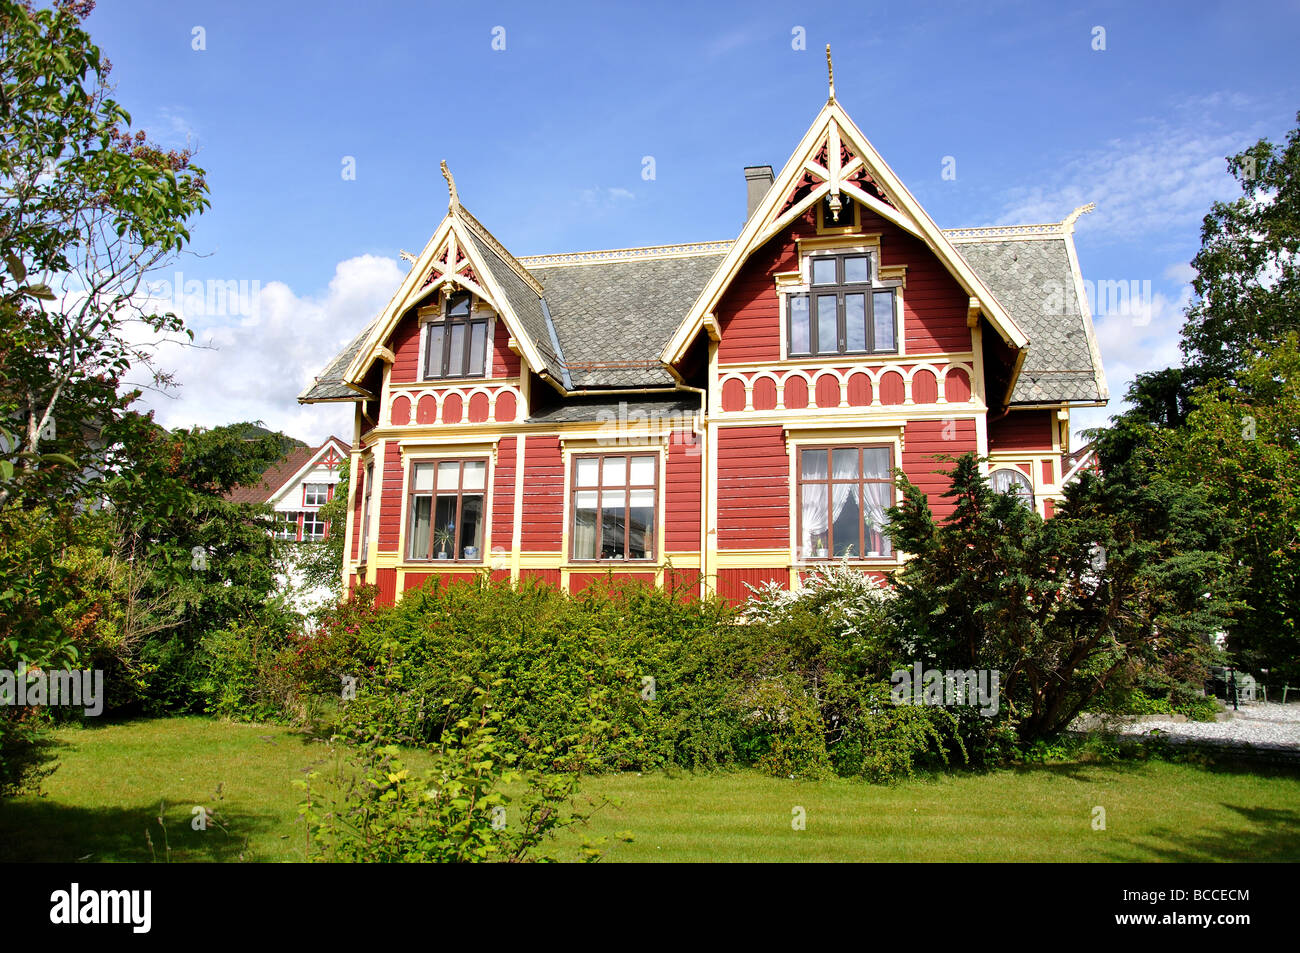 La maison Nordique, Eidsgata, Nordfjordeid, Sogn og Fjordane, Norvège Banque D'Images